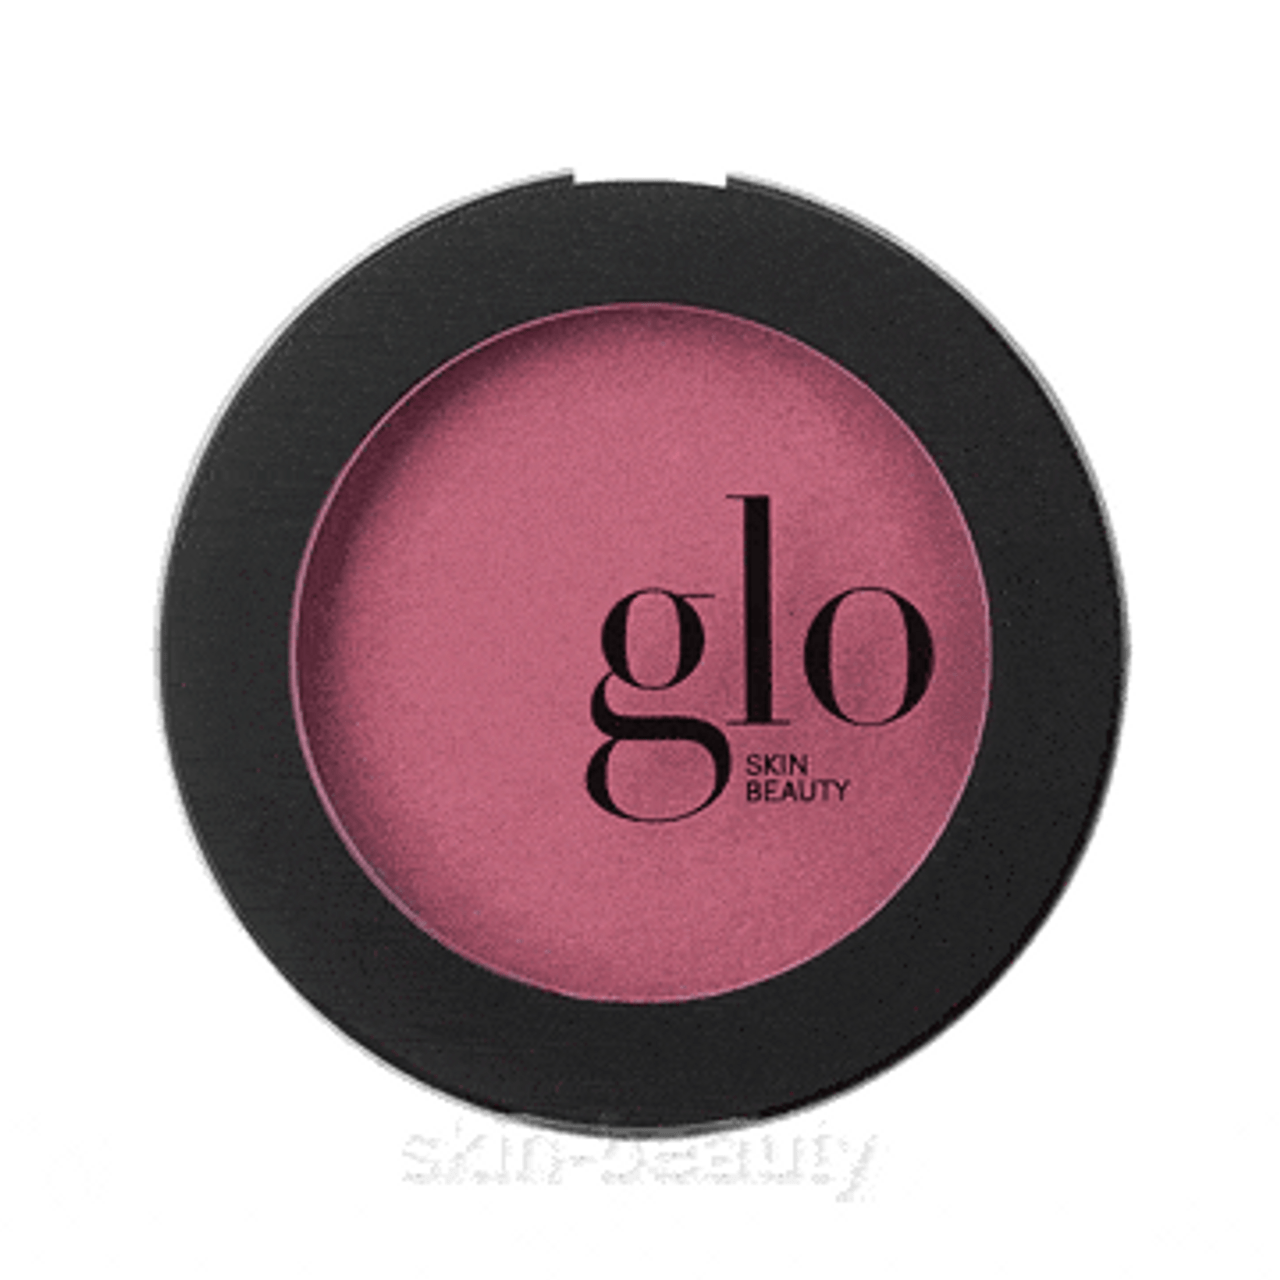 Glo Skin Beauty Blush Passion - 0.12 oz (214-1-214)